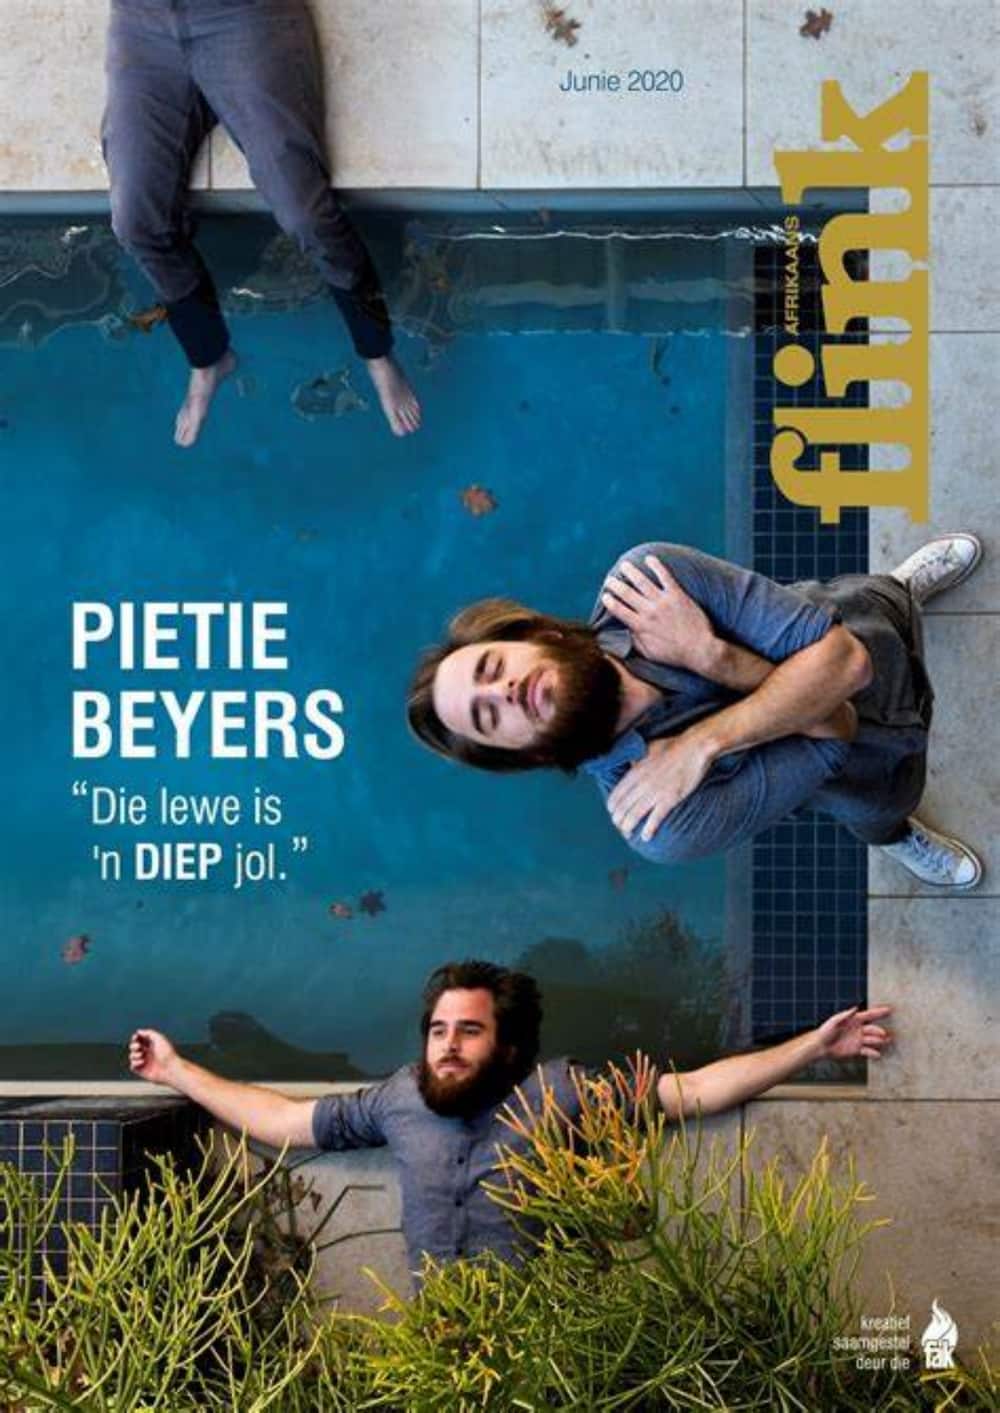 Pietie Beyers Biography profile